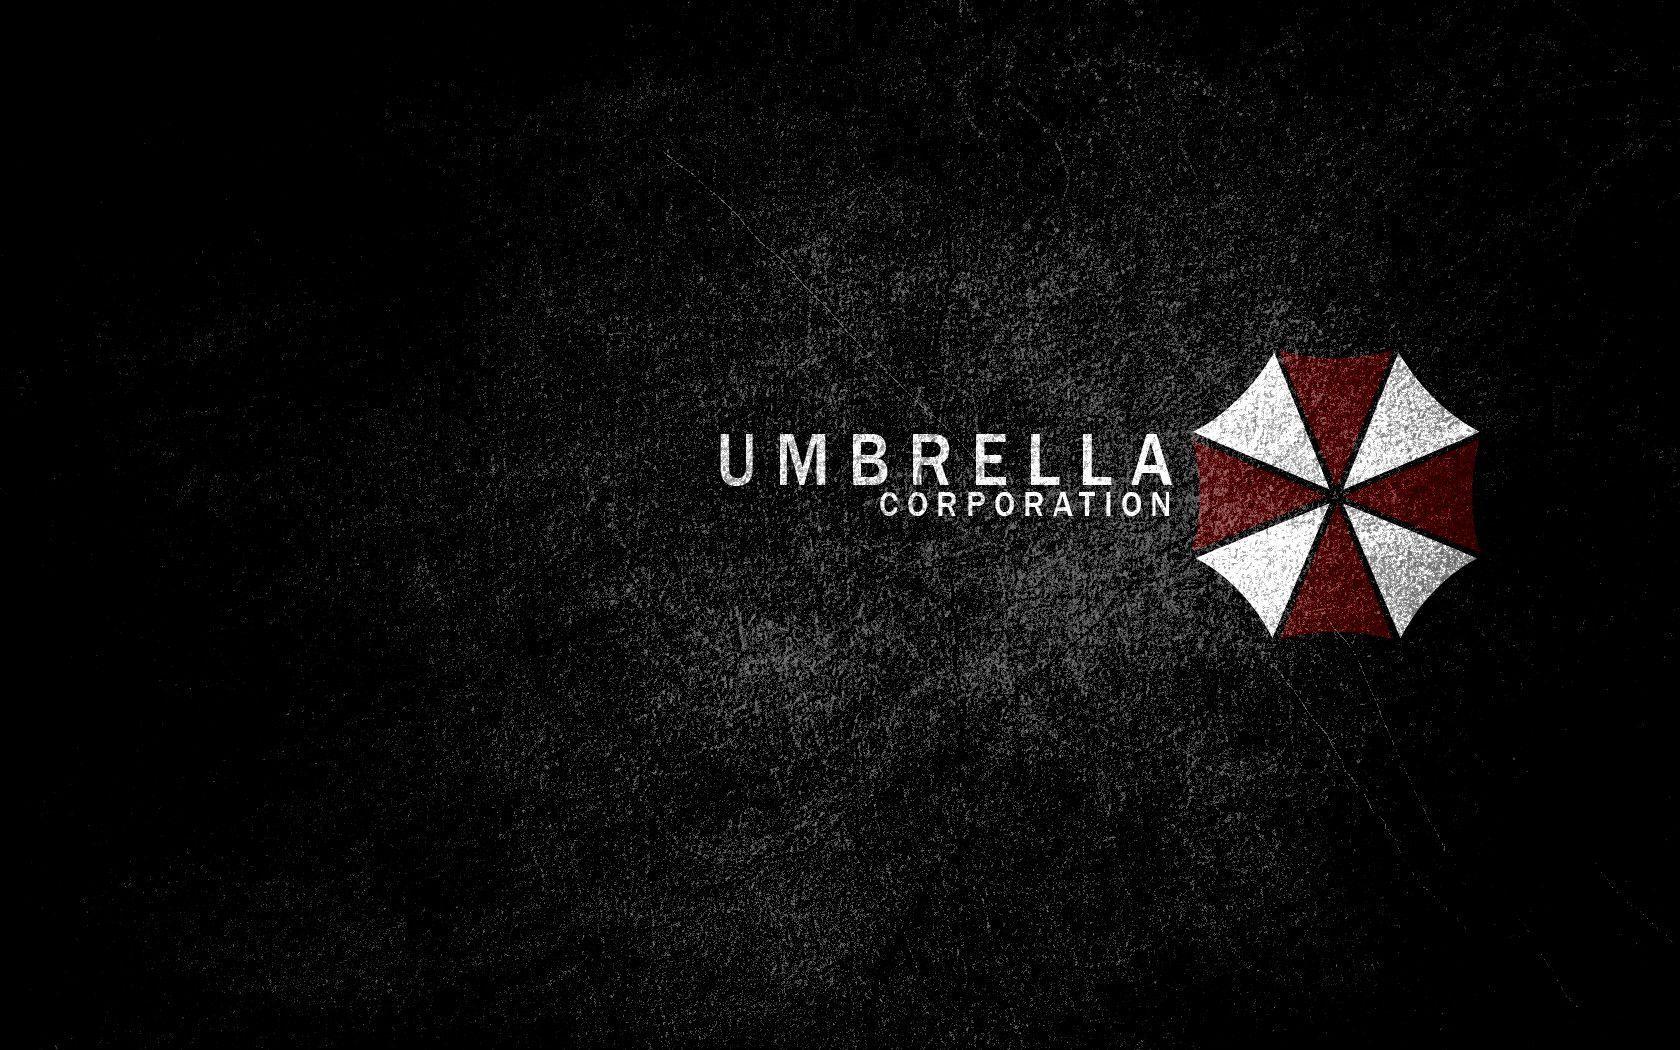 Umbrella Corporation Logo Wallpapers Top Free Umbrella Corporation Logo Backgrounds Wallpaperaccess